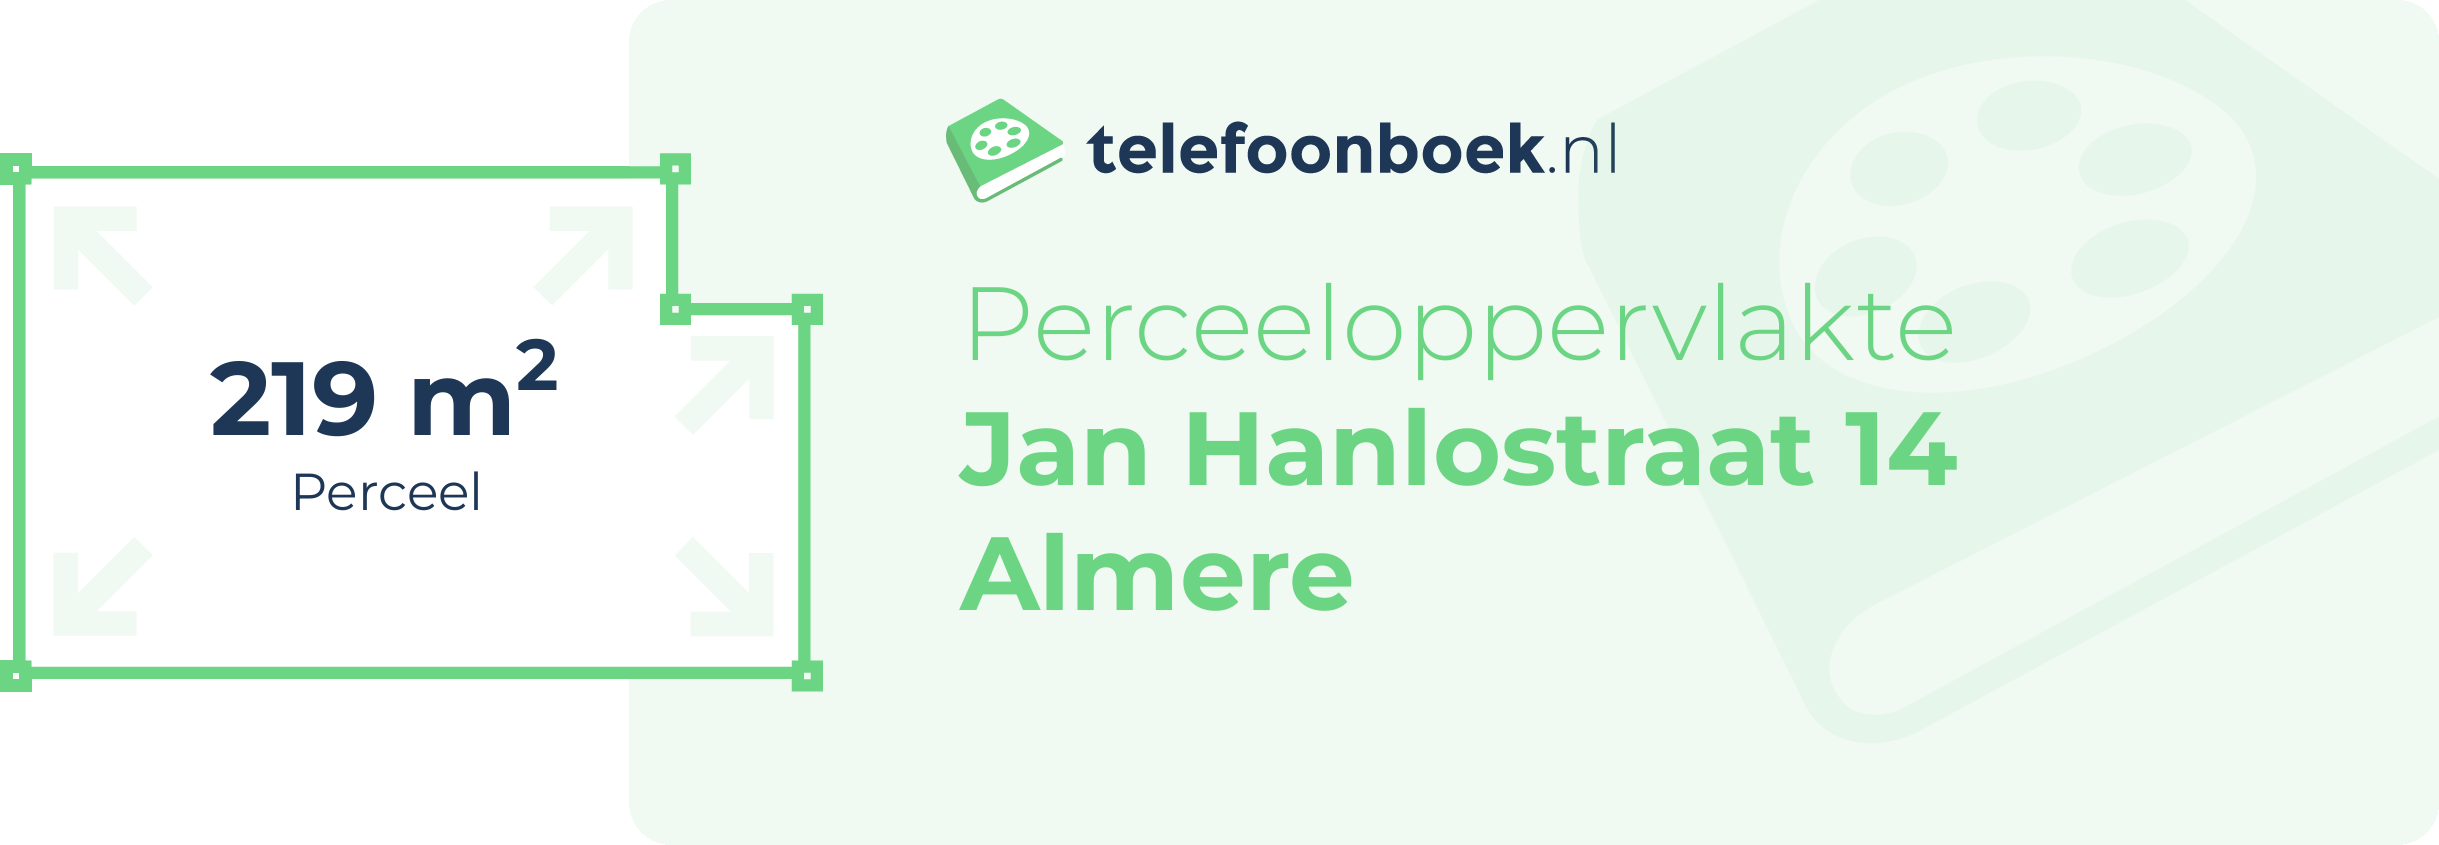 Perceeloppervlakte Jan Hanlostraat 14 Almere